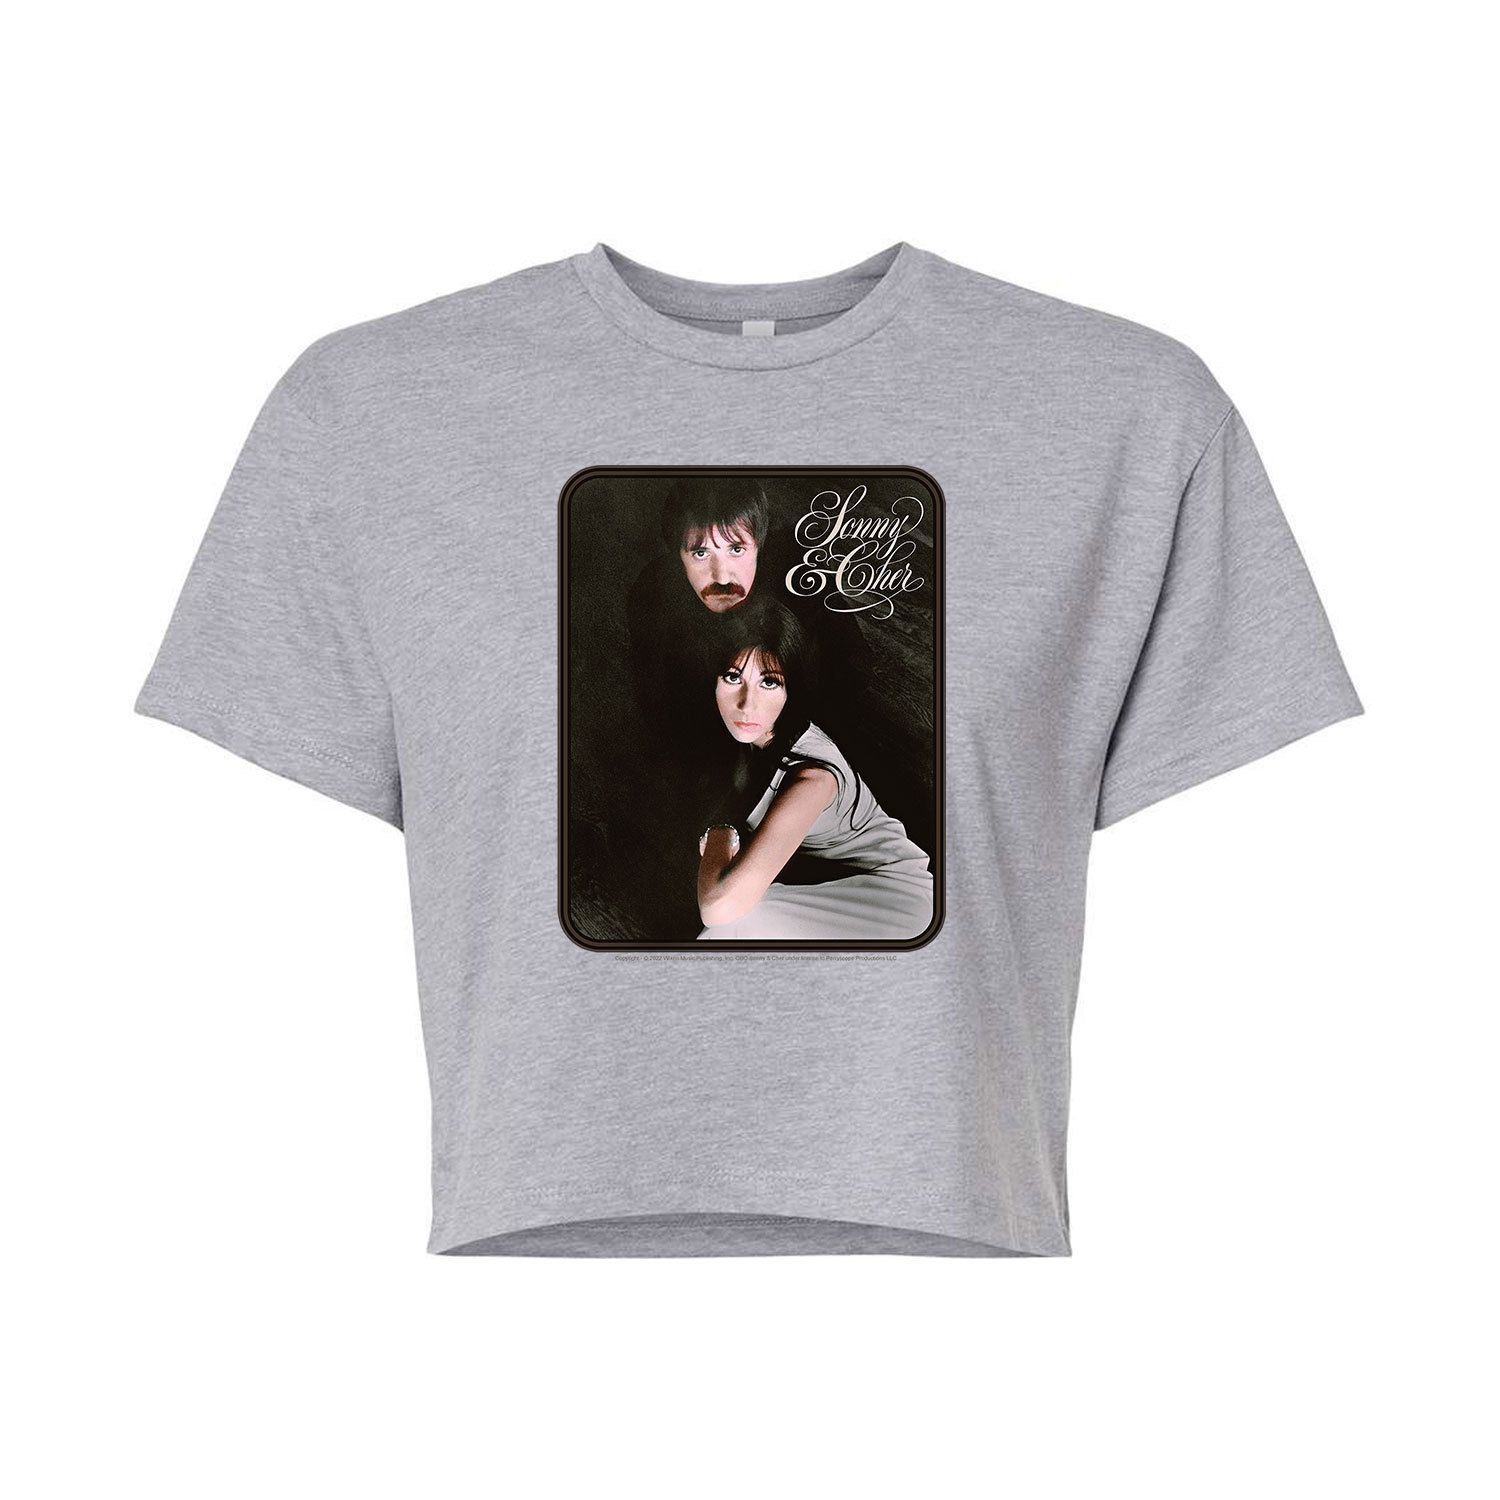 Укороченная футболка с рисунком Sonny & Cher для юниоров Licensed Character, серый